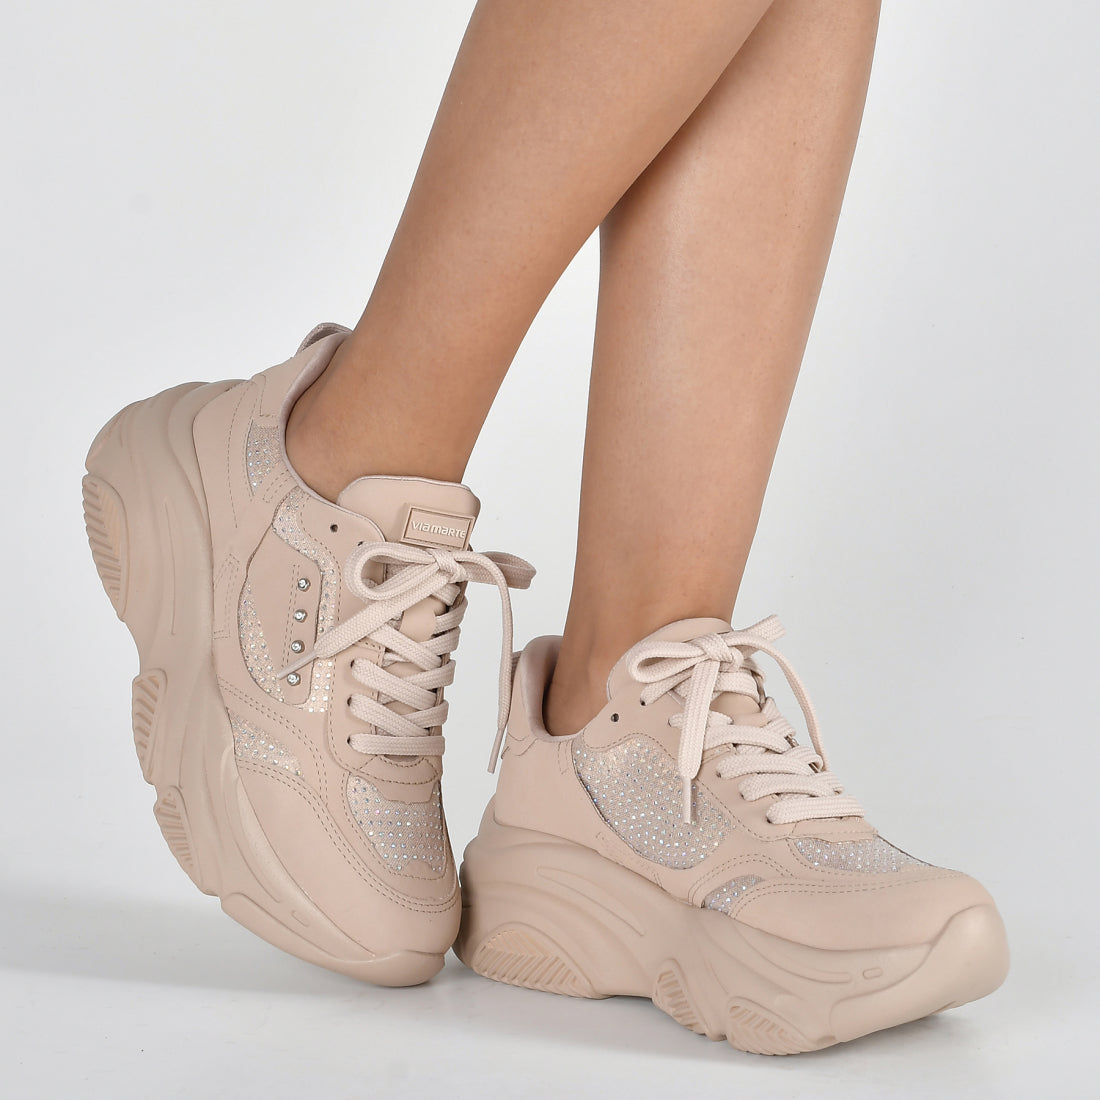 Verona Sneaker - Size 4,5,6,9,10,11